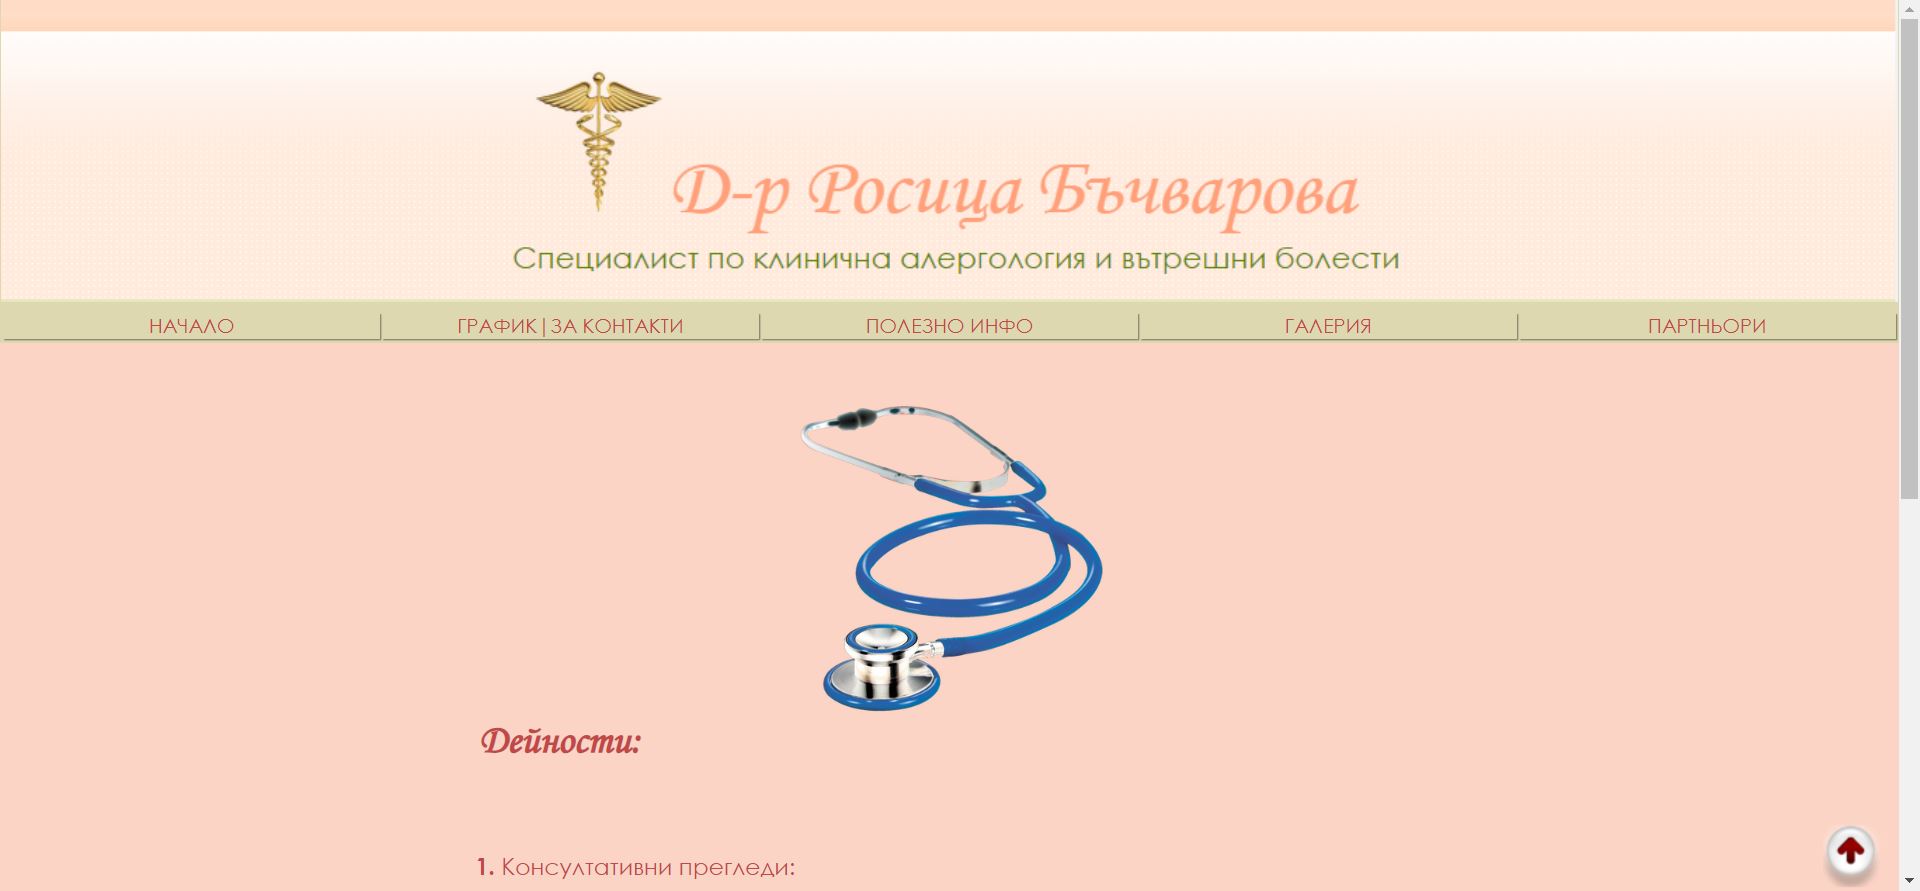 Д-р Росица Бъчварова - Специалист алерголог - Русе